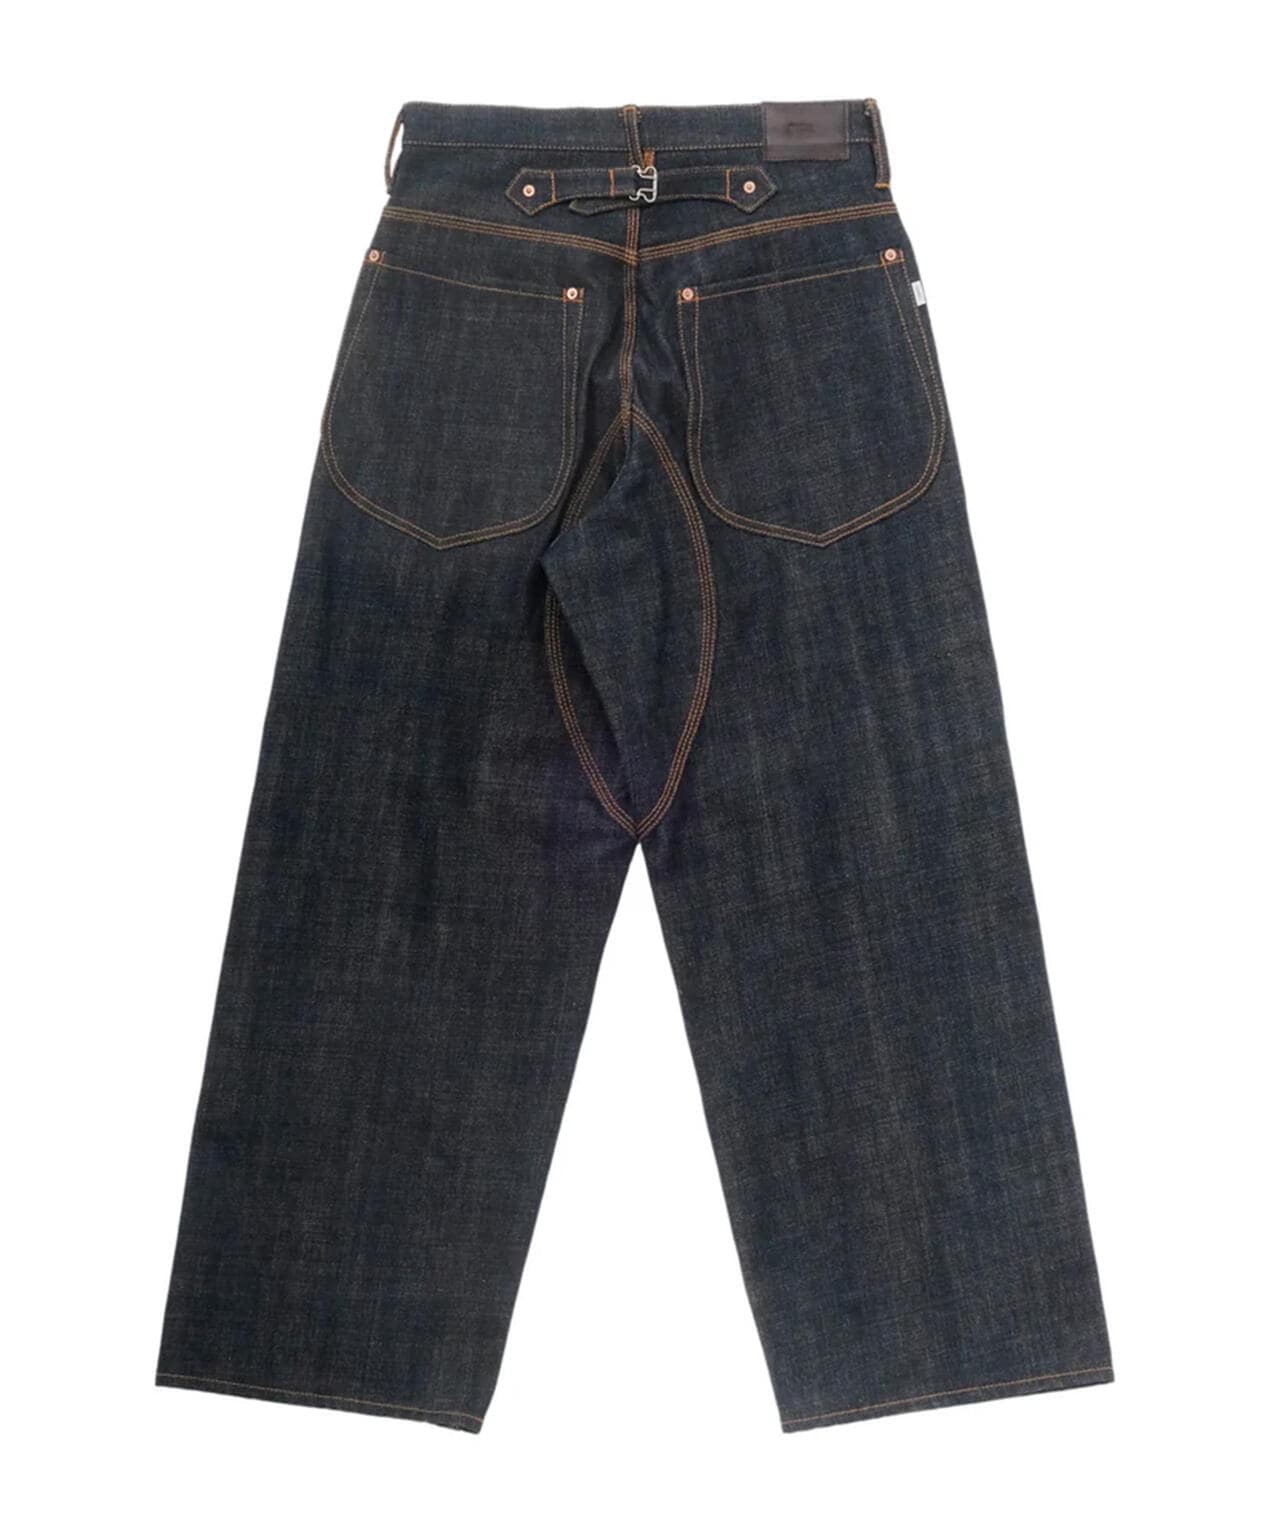 Sugarhill classic denim pants size32size32